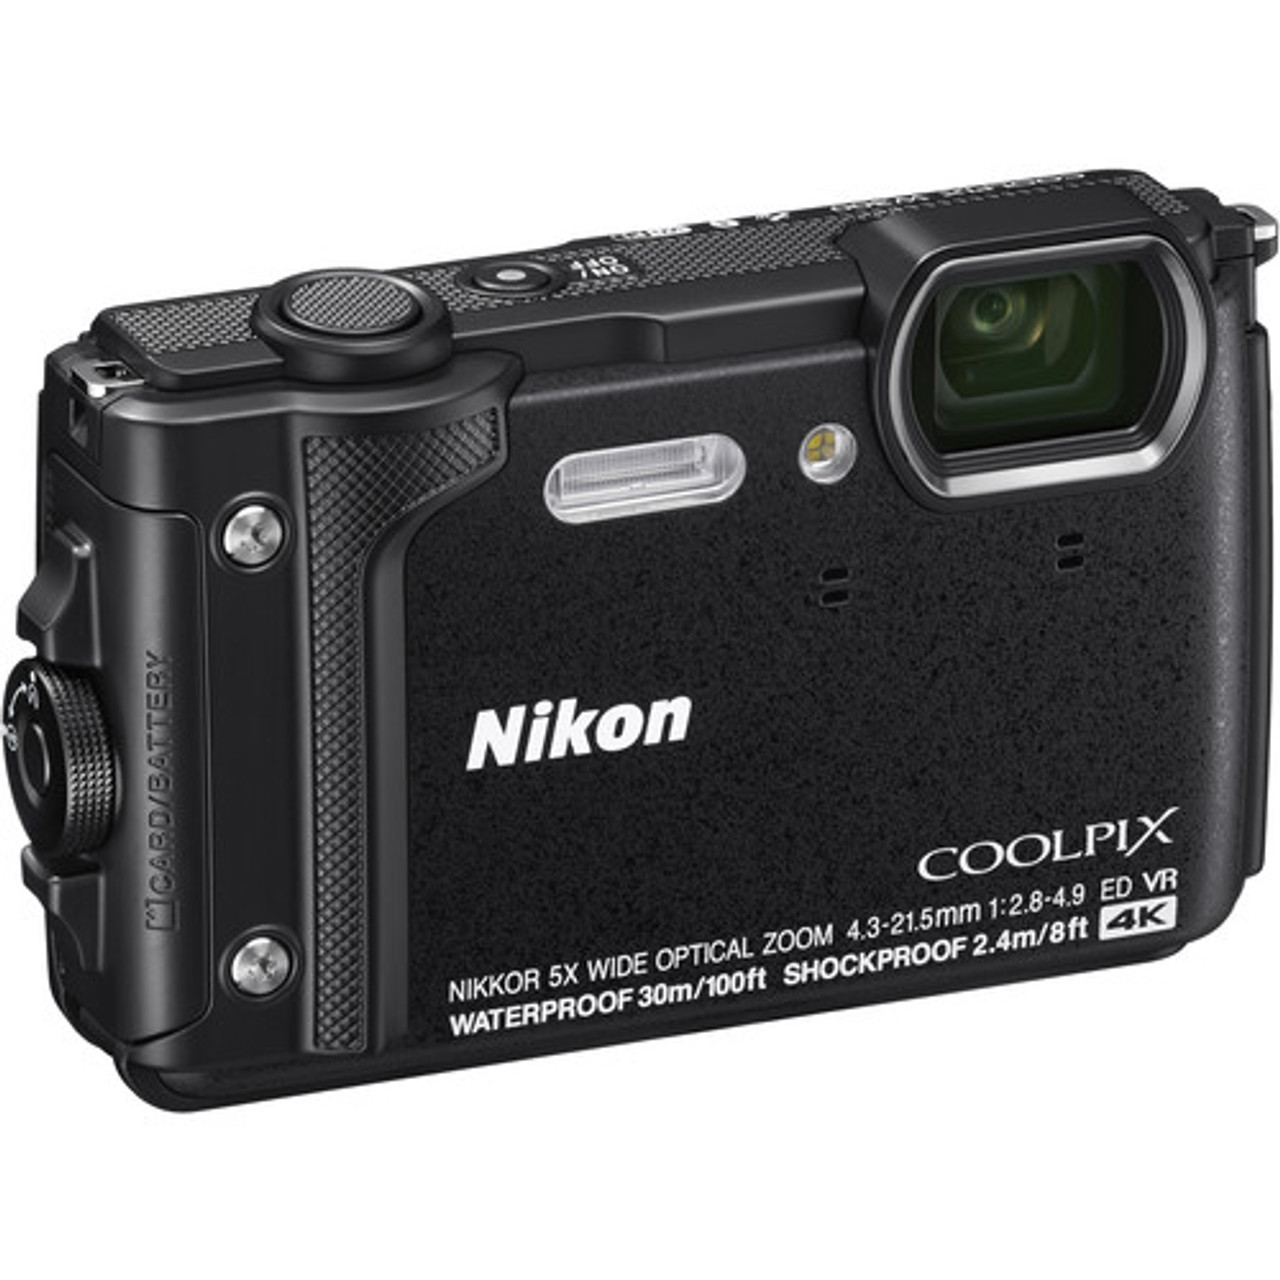 Nikon Coolpix W300 (Black) at Acephoto.net